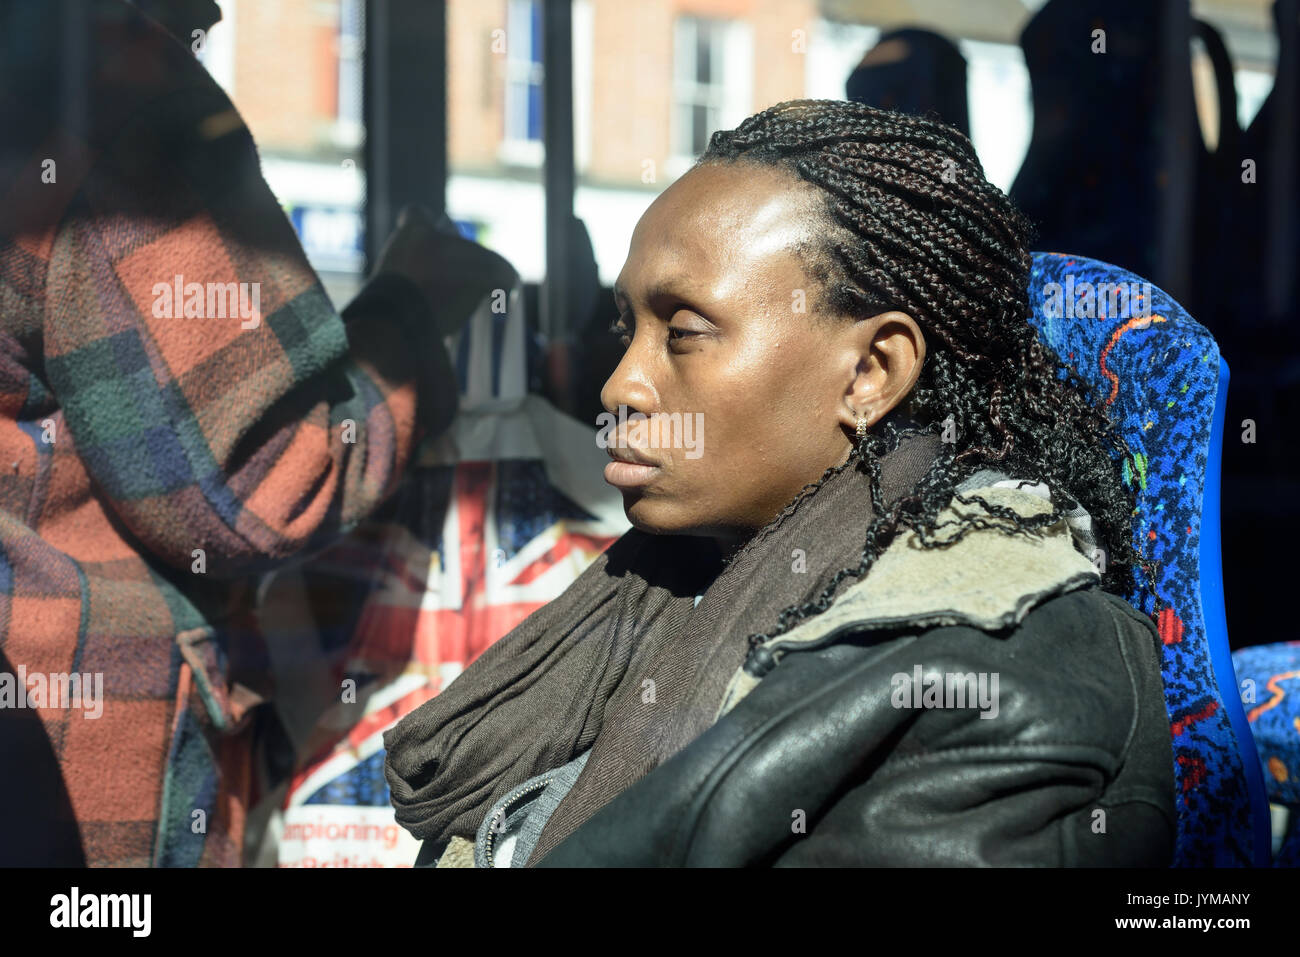 Sleepy black woman with dreadlocks hair sitting on a bus in bright sunshine Stock Photo